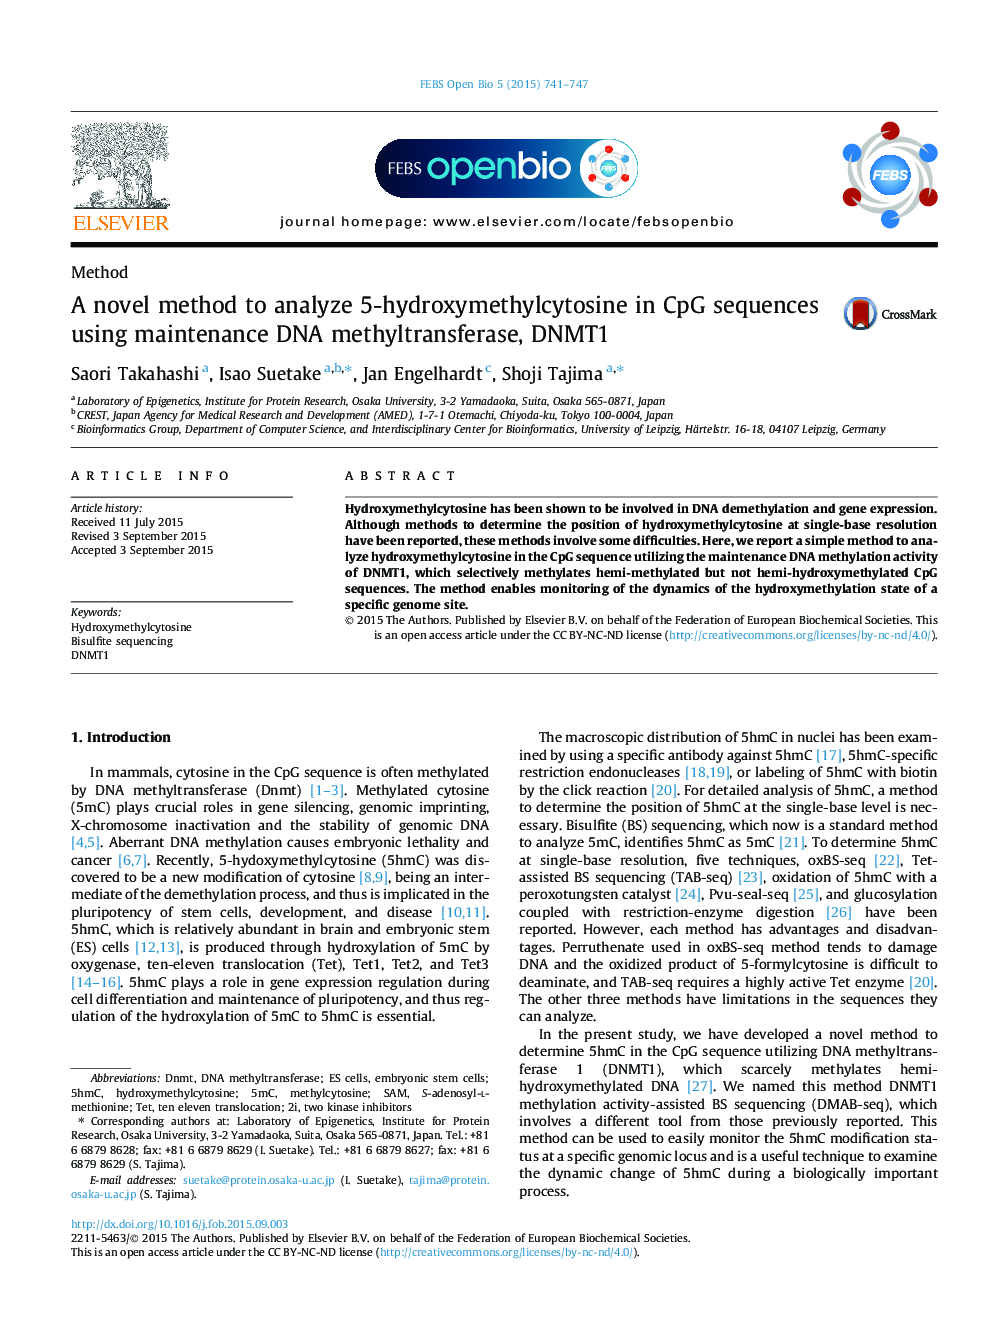 A novel method to analyze 5-hydroxymethylcytosine in CpG sequences using maintenance DNA methyltransferase, DNMT1